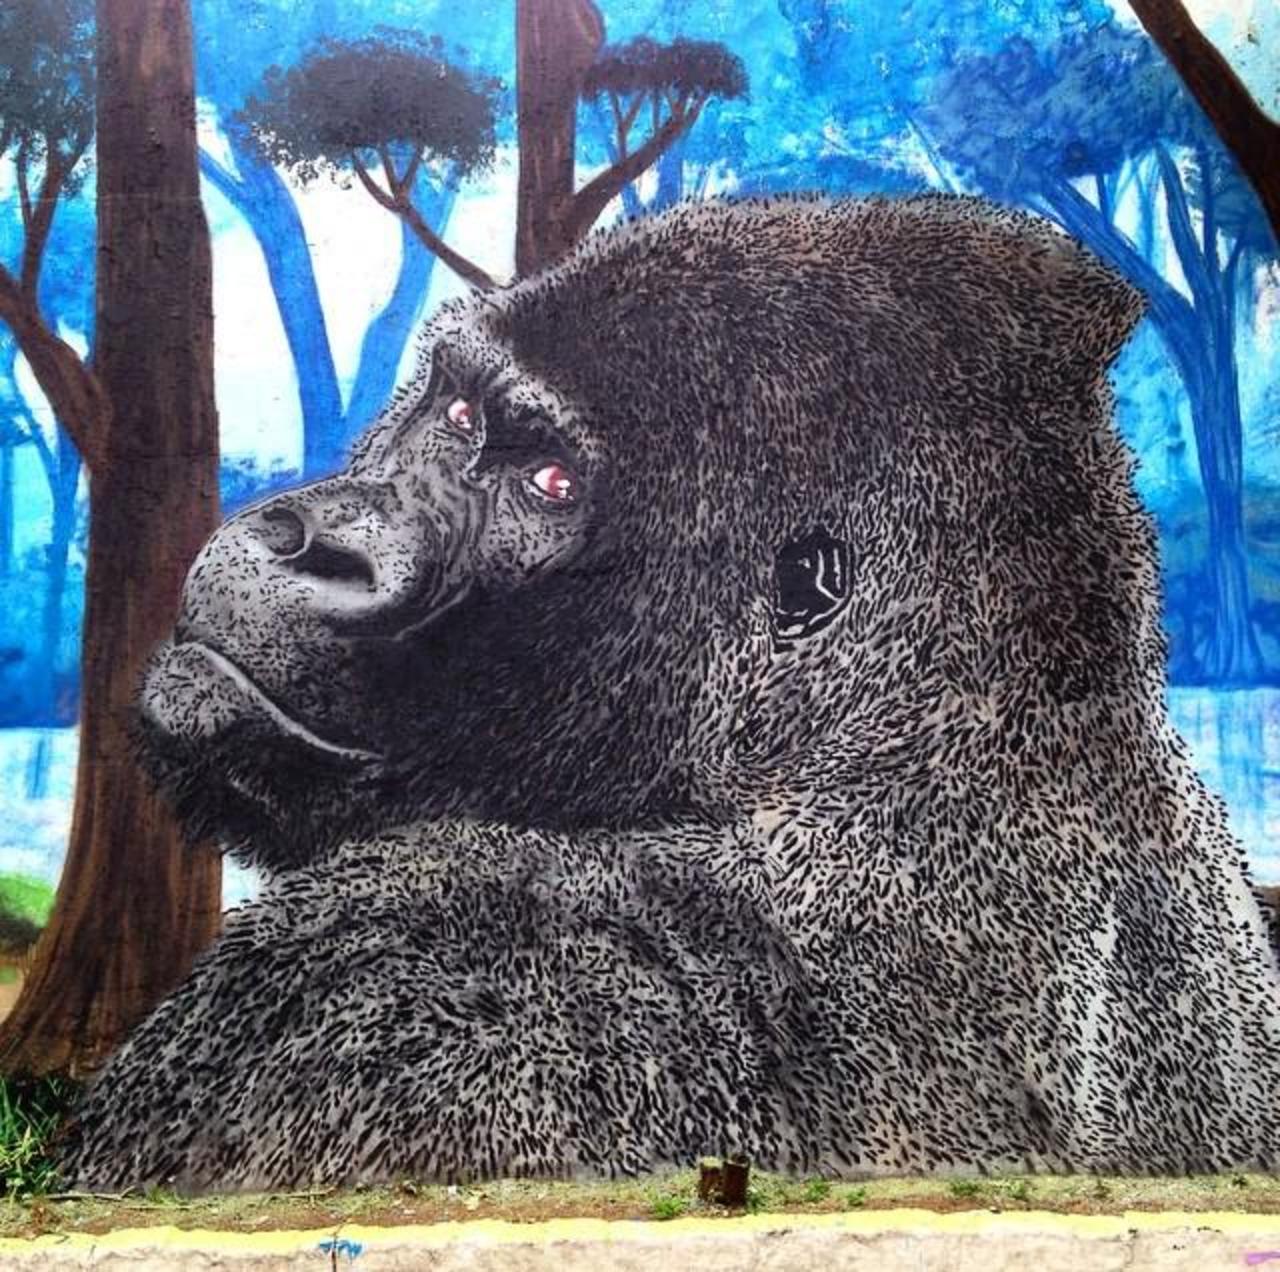 Superb Nature in Street Art piece by Thassio in São Paulo, Brazil  

#art #mural #graffiti #streetart http://t.co/V76dnQj7MU